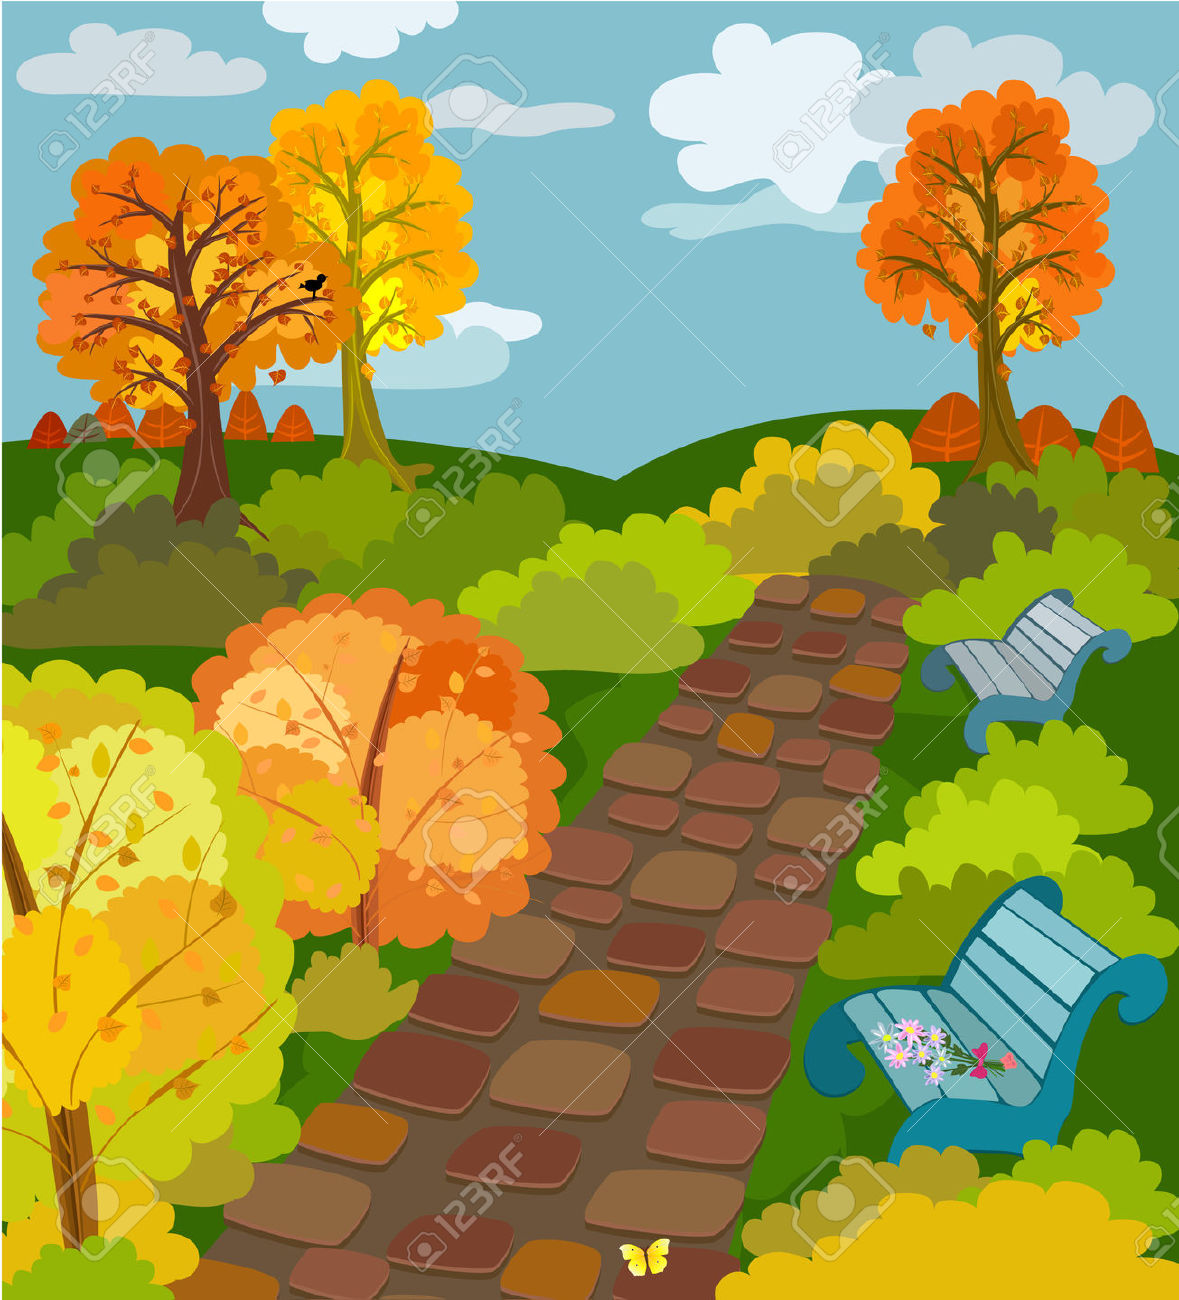 Fall Scenery Clipart.